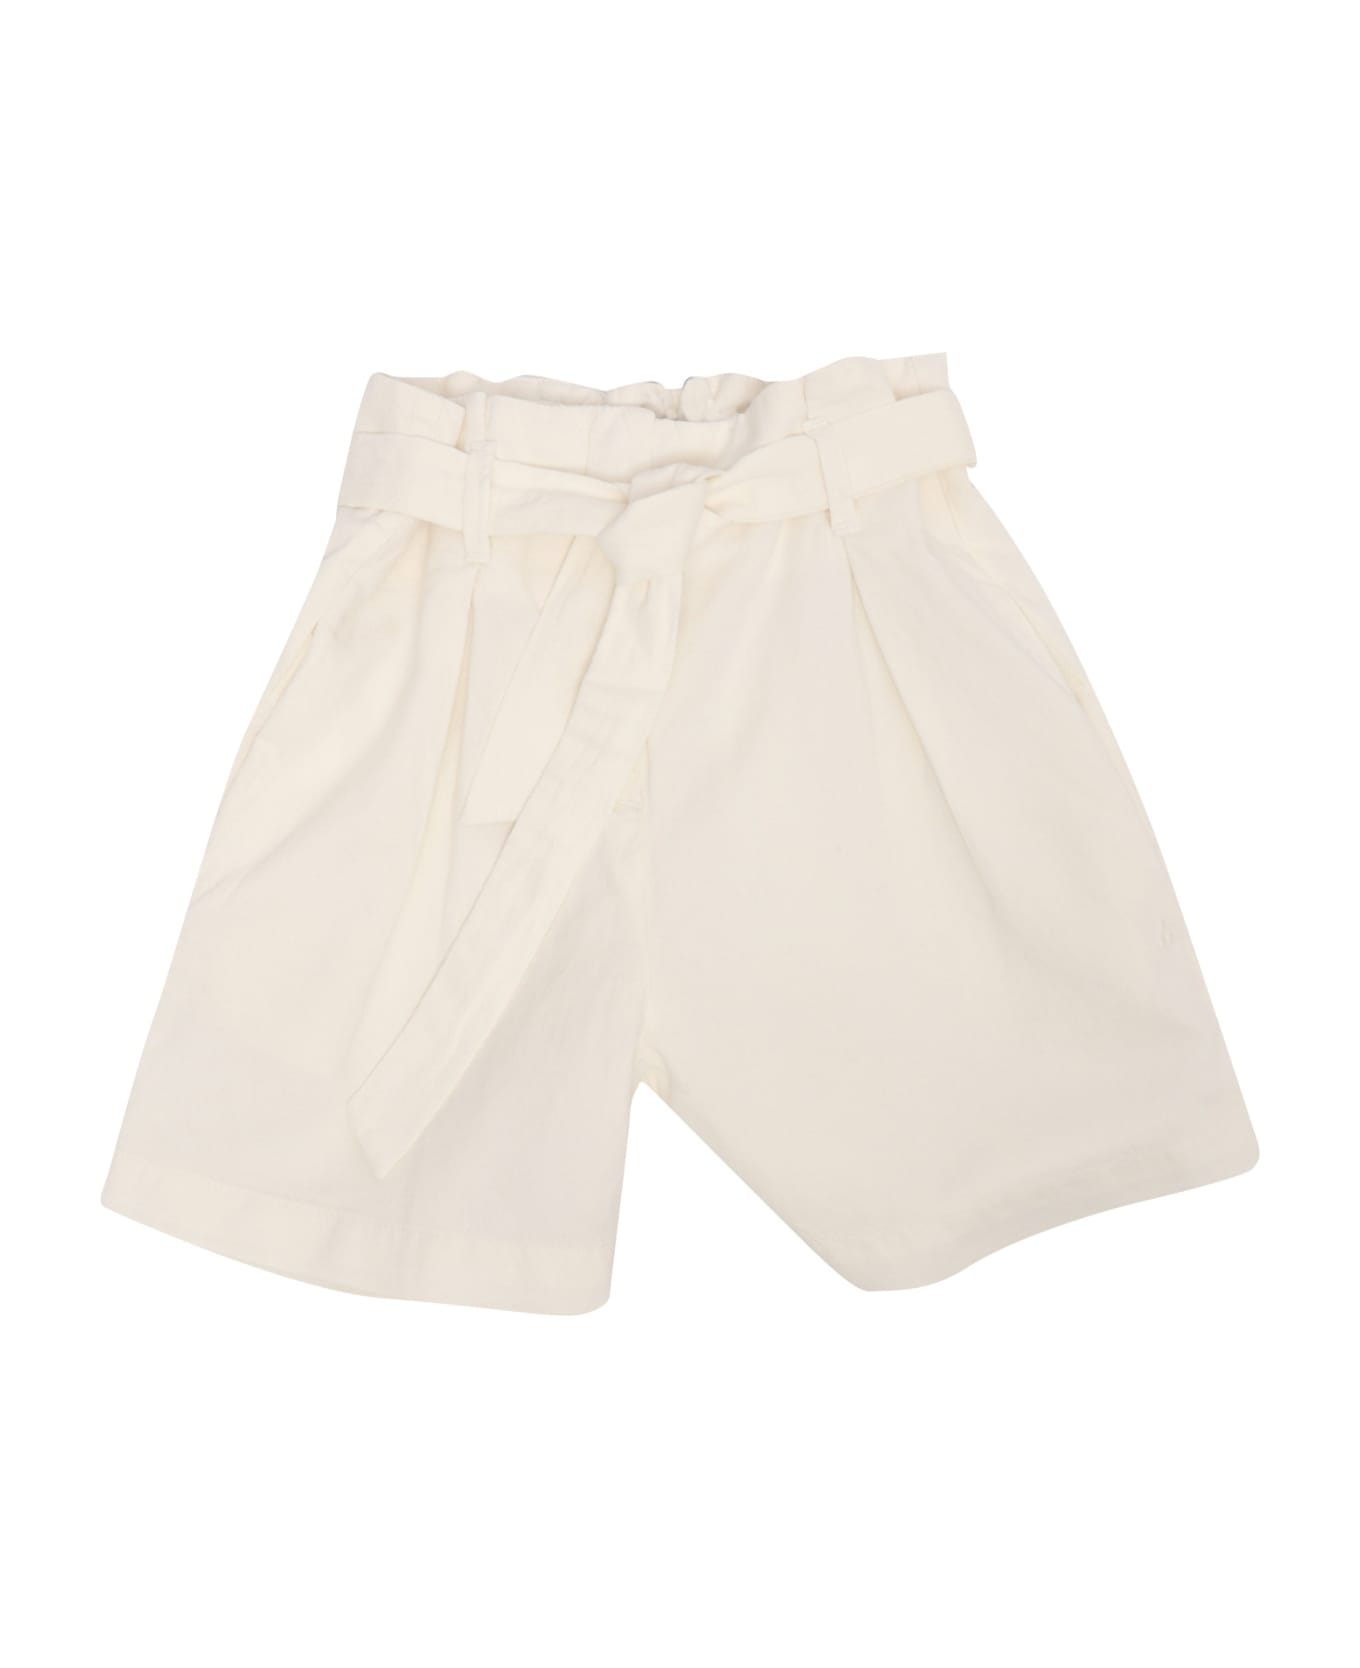 Bonpoint Bermuda Shorts For Girls - WHITE